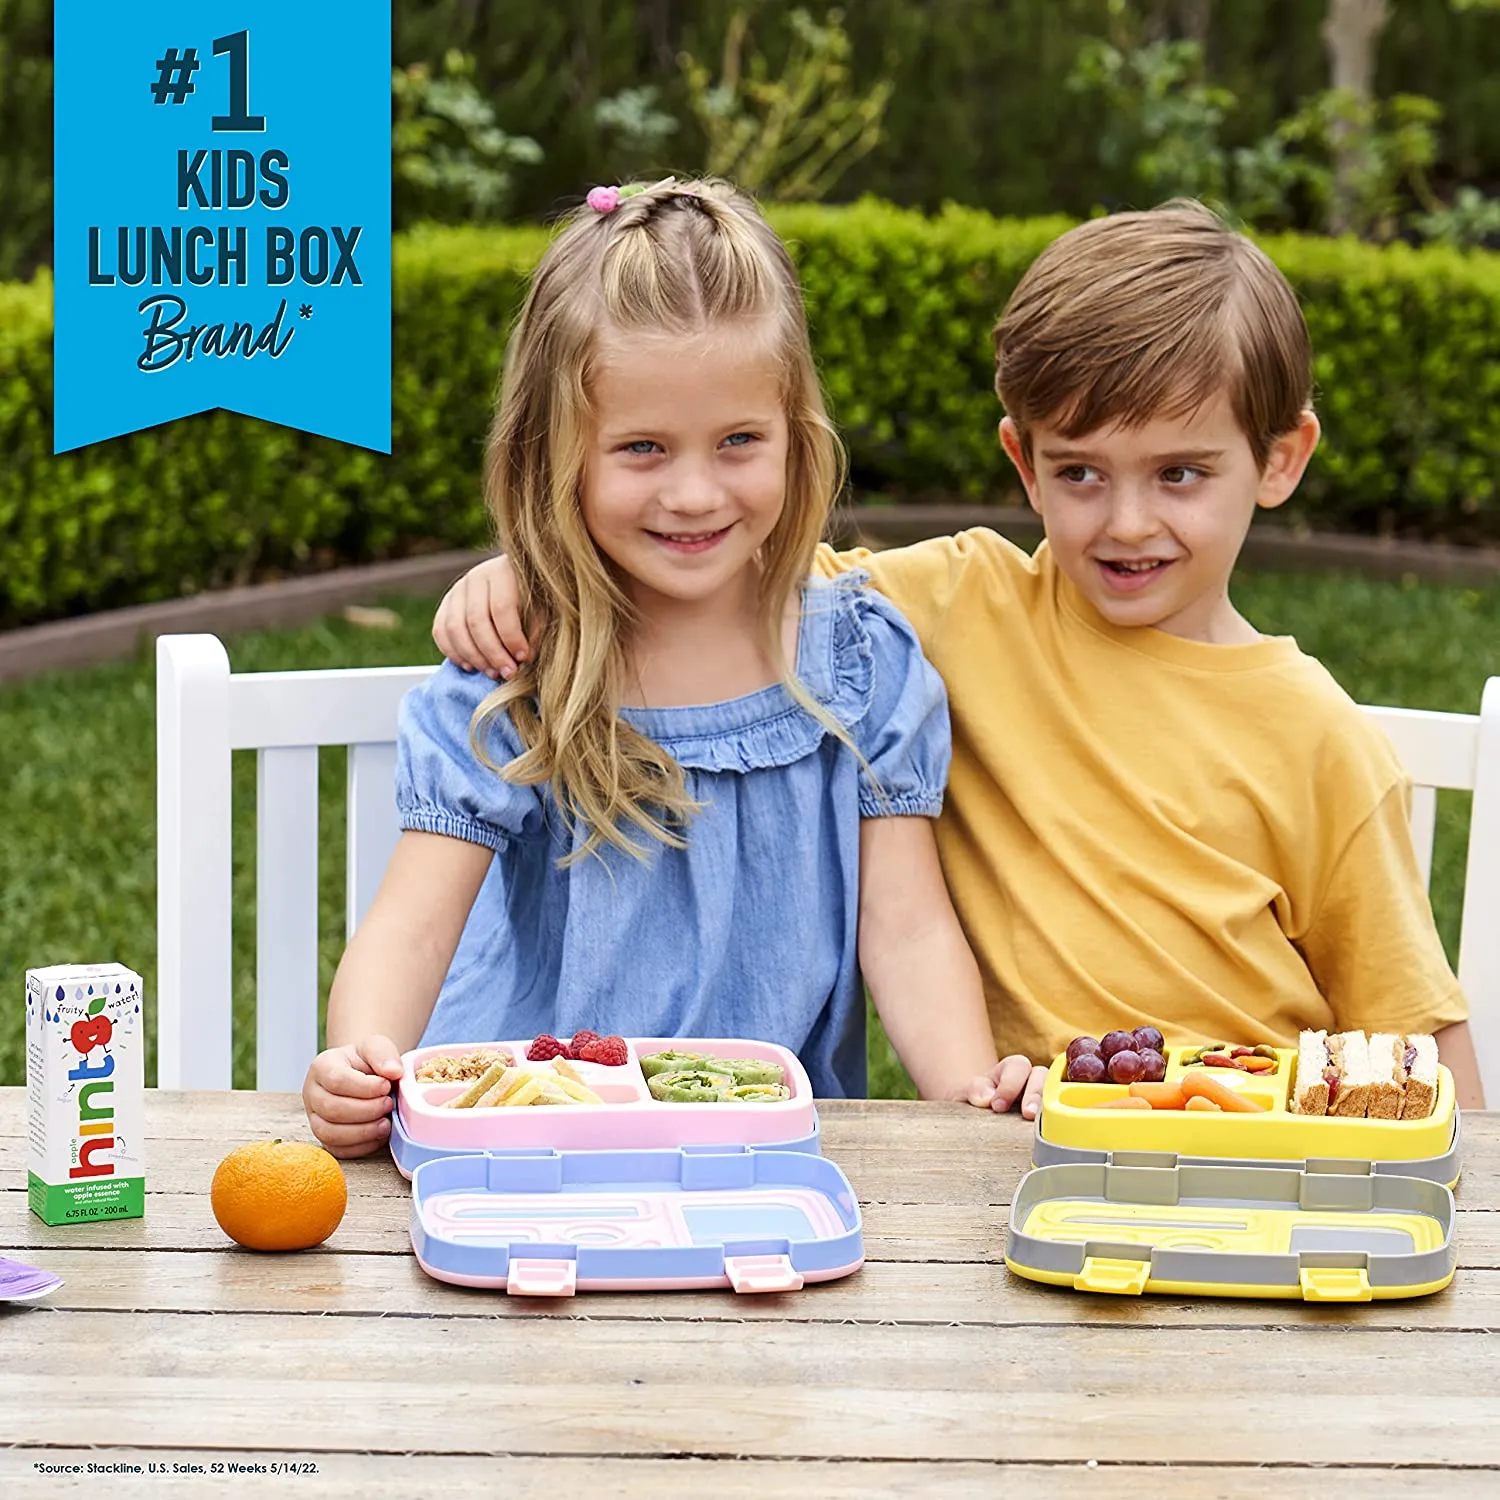 Bentgo Kids Lunch Safari Box in Green